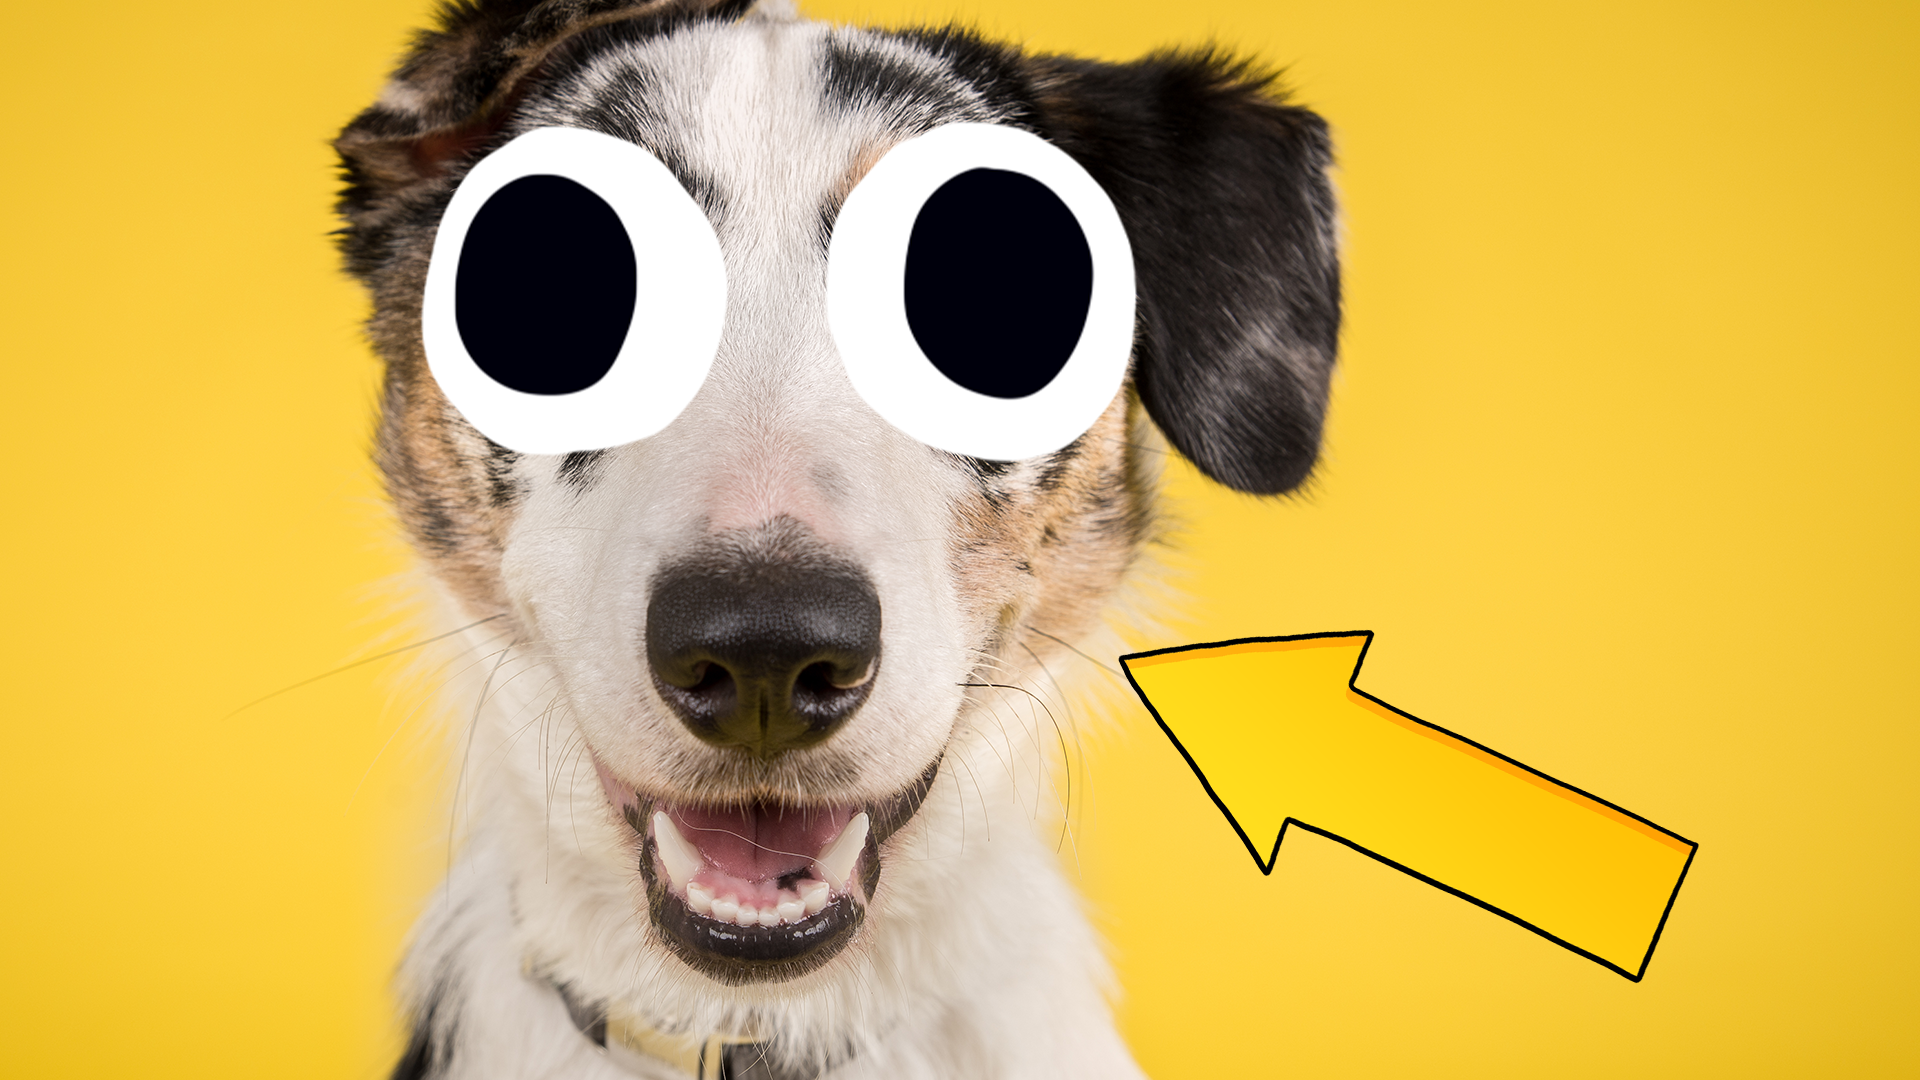 Goofy dog with yellow arrow